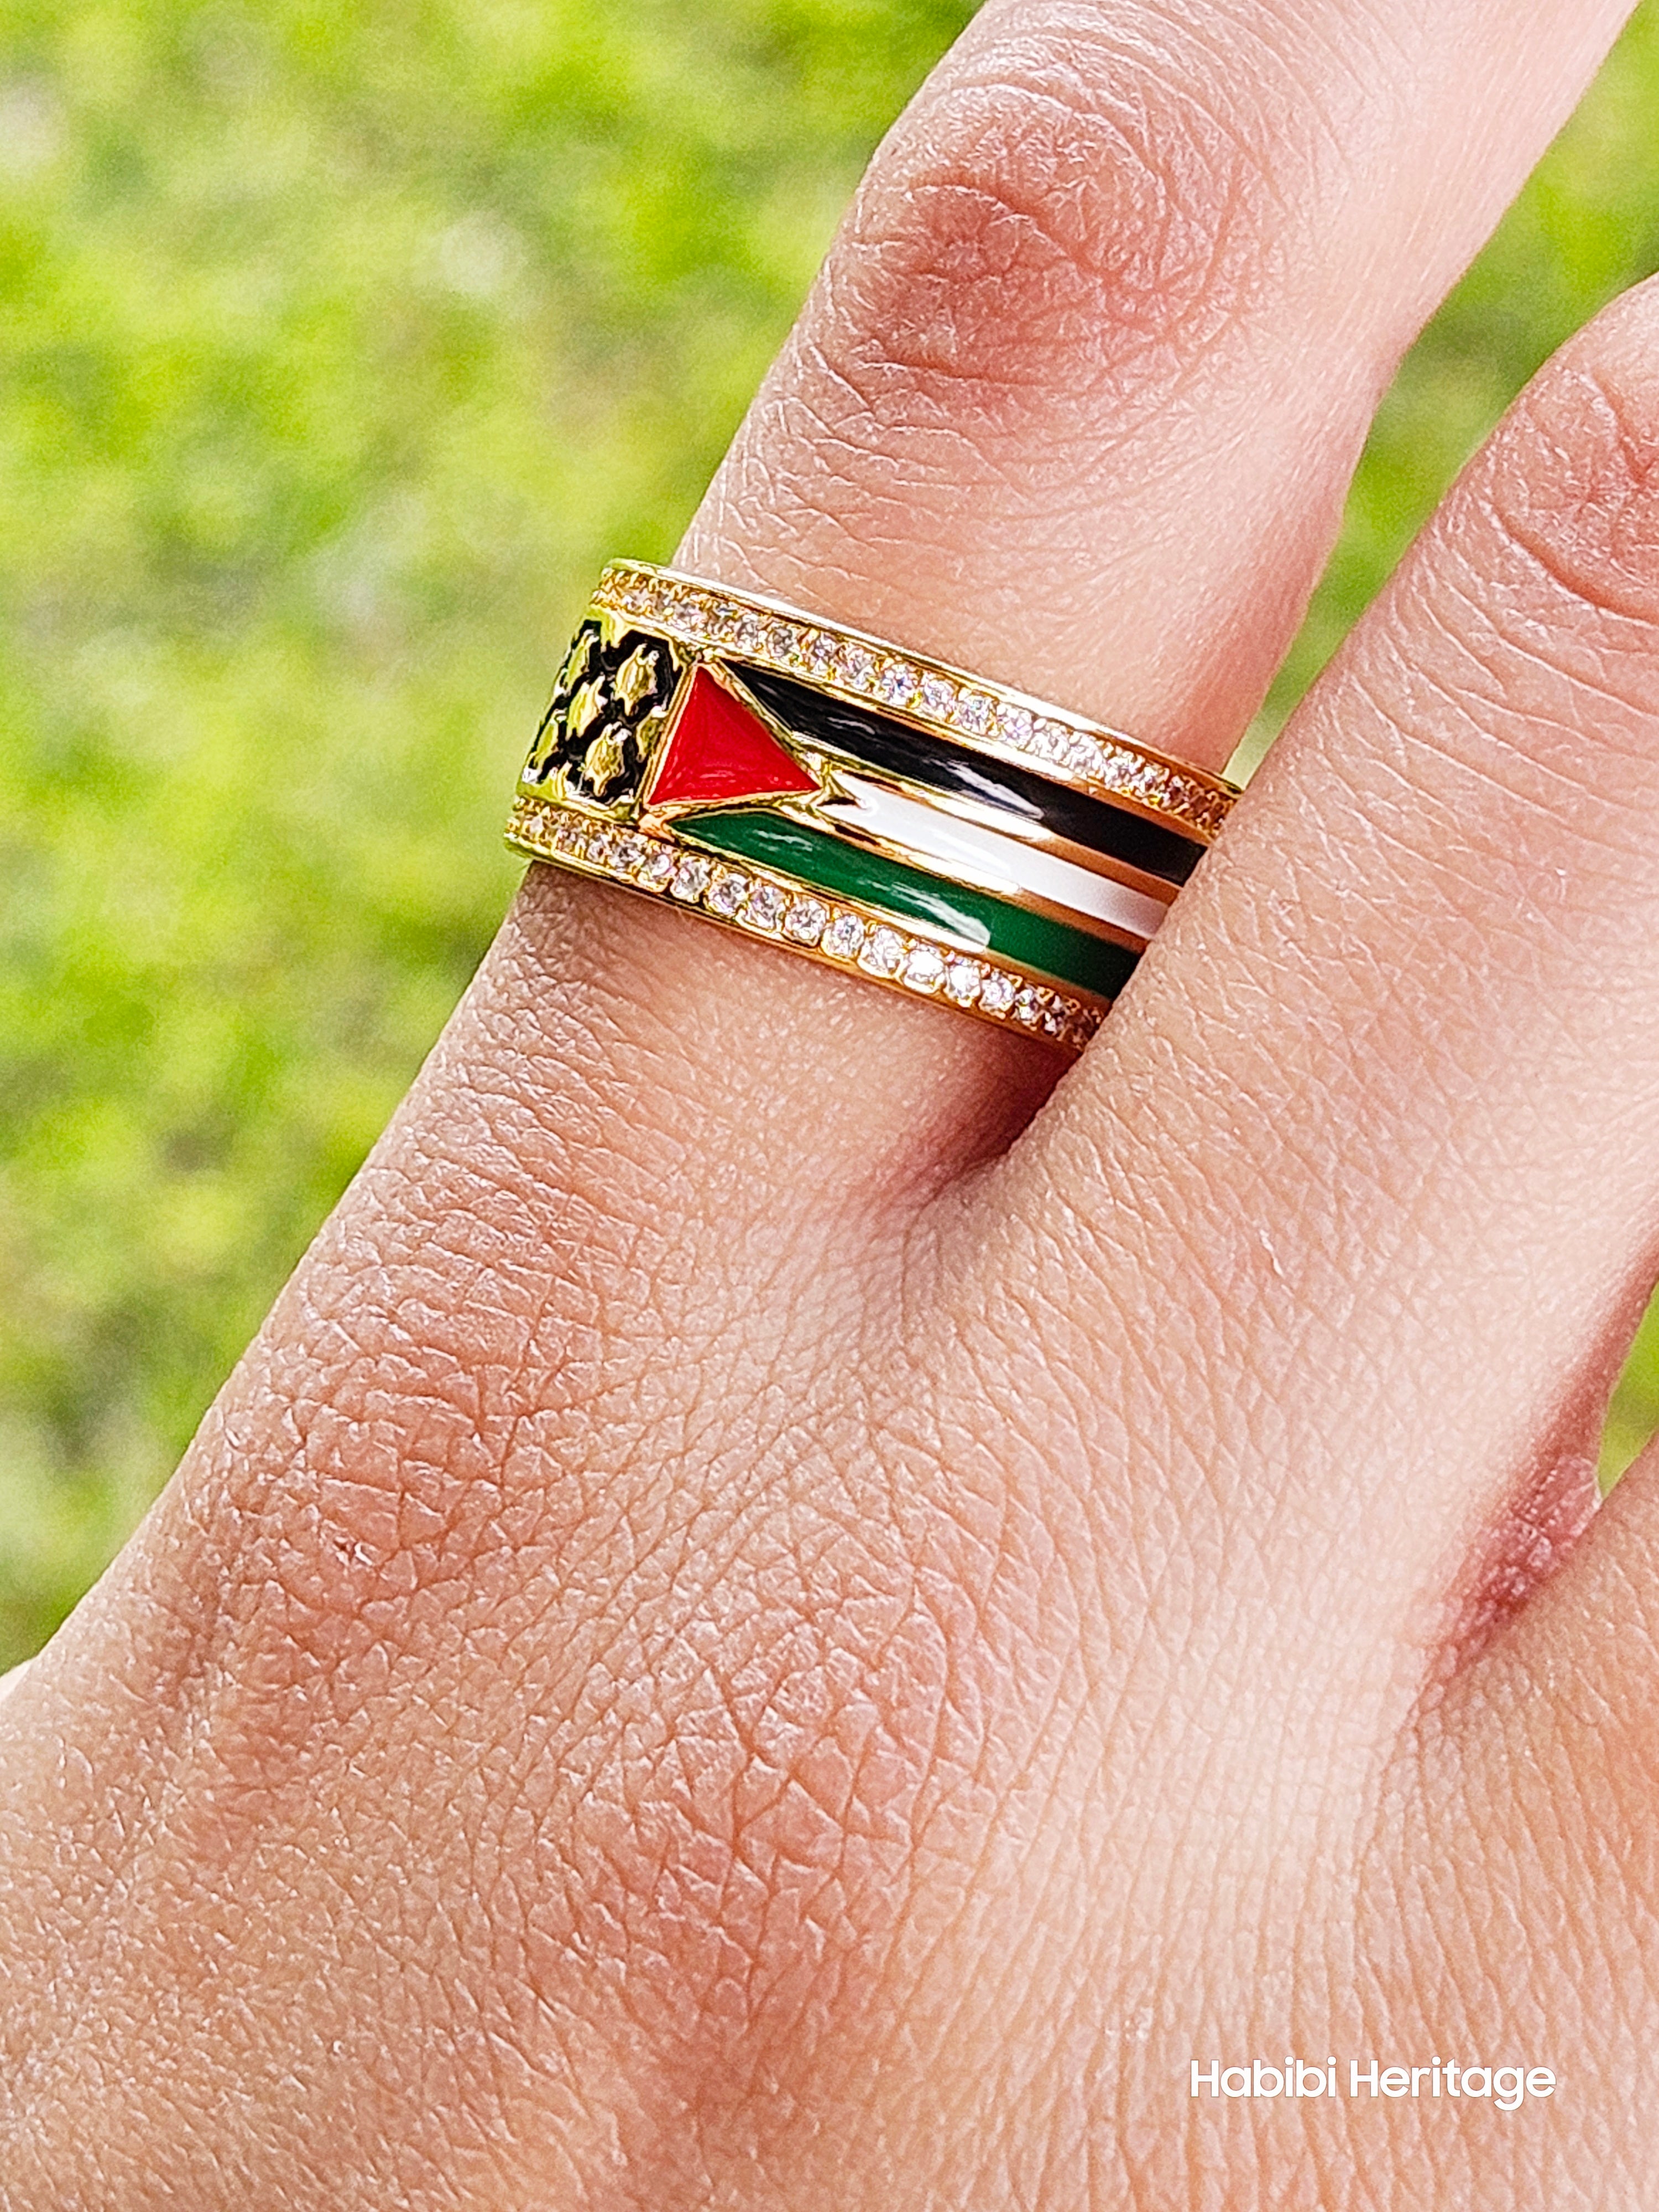 Palestine Keffiyeh Ring with Opening Adjustable - Habibi Heritage